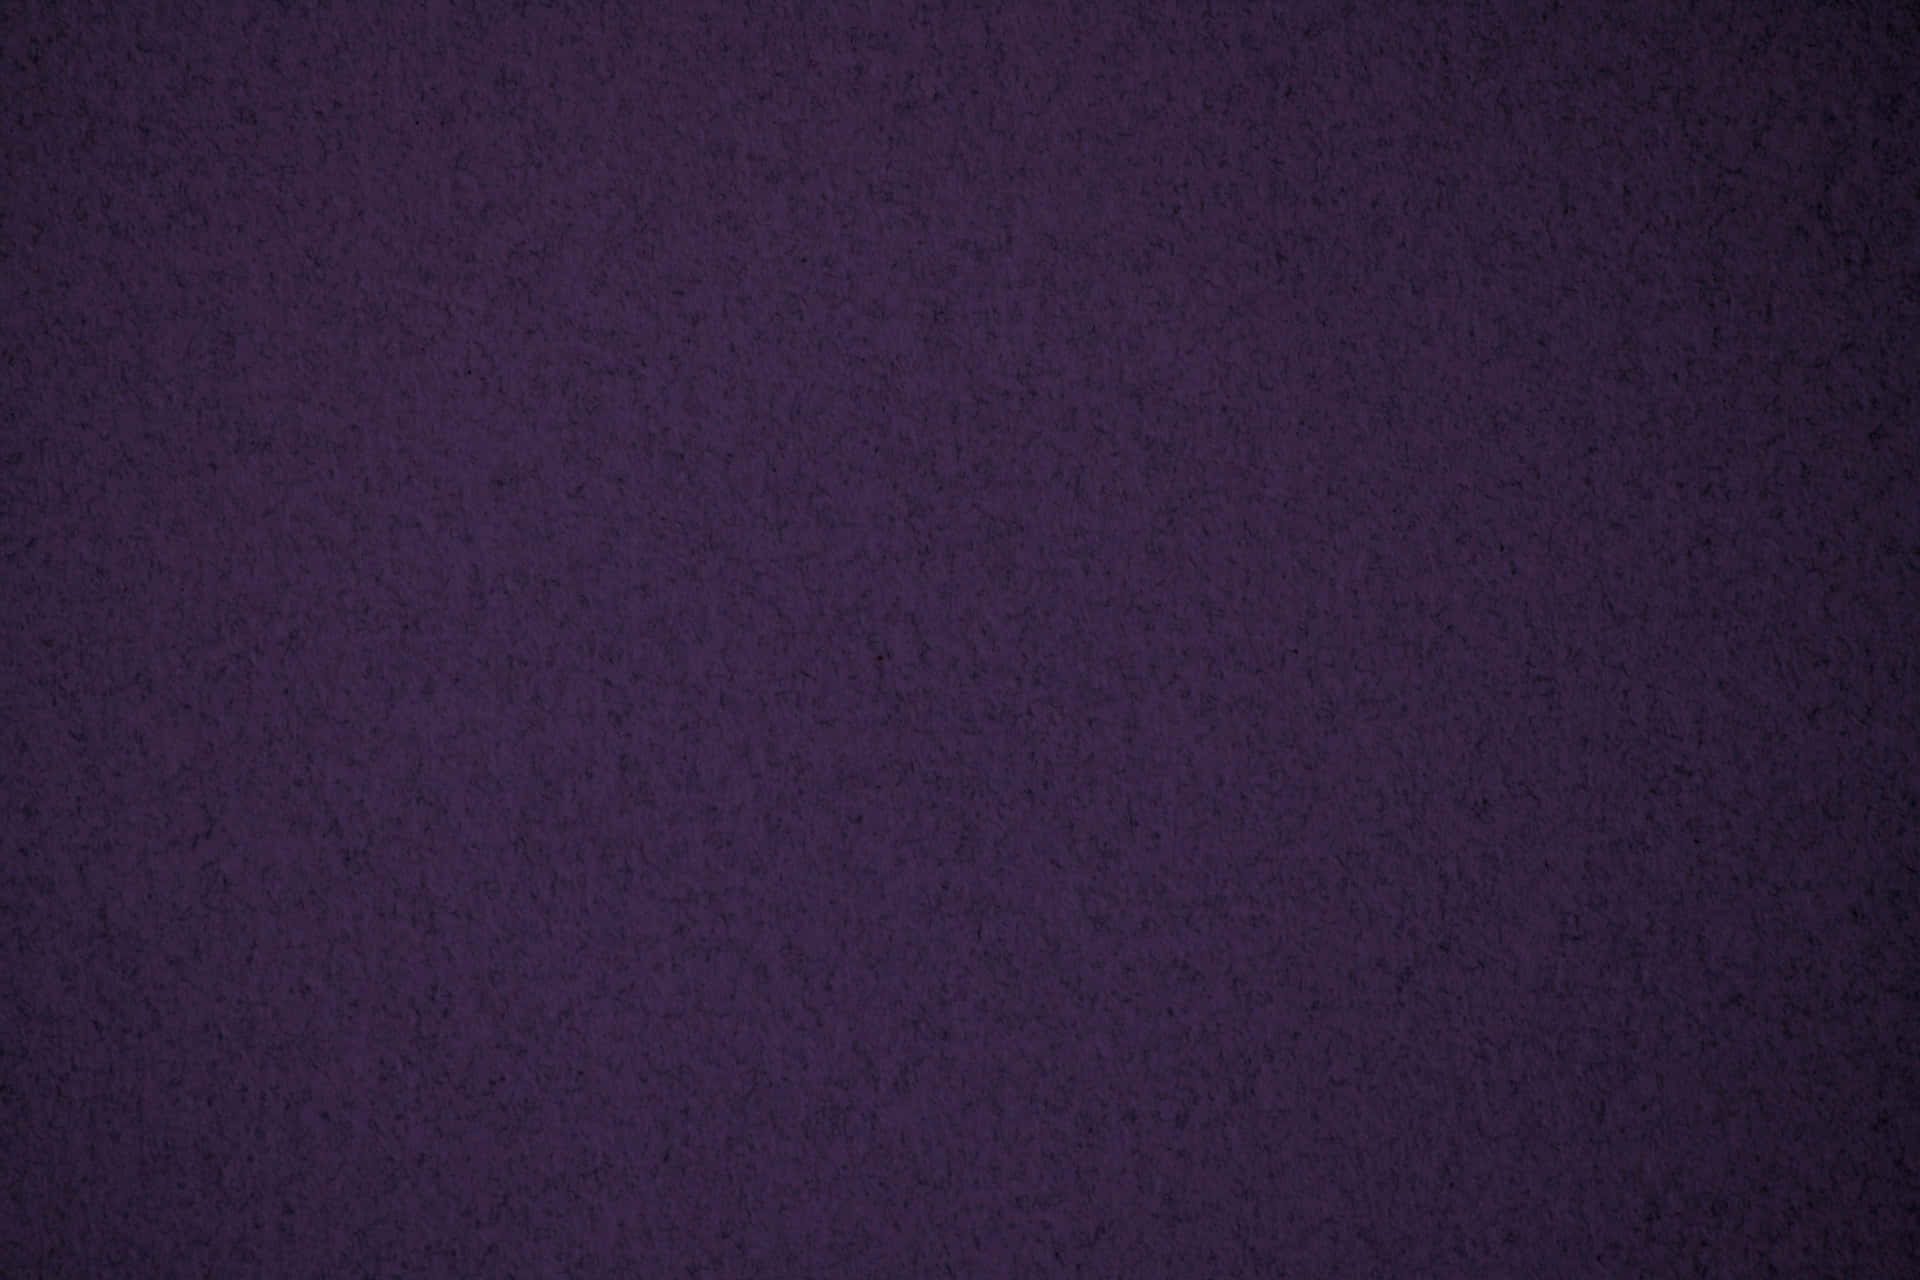 Bright and Vibrant Purple Textured Design